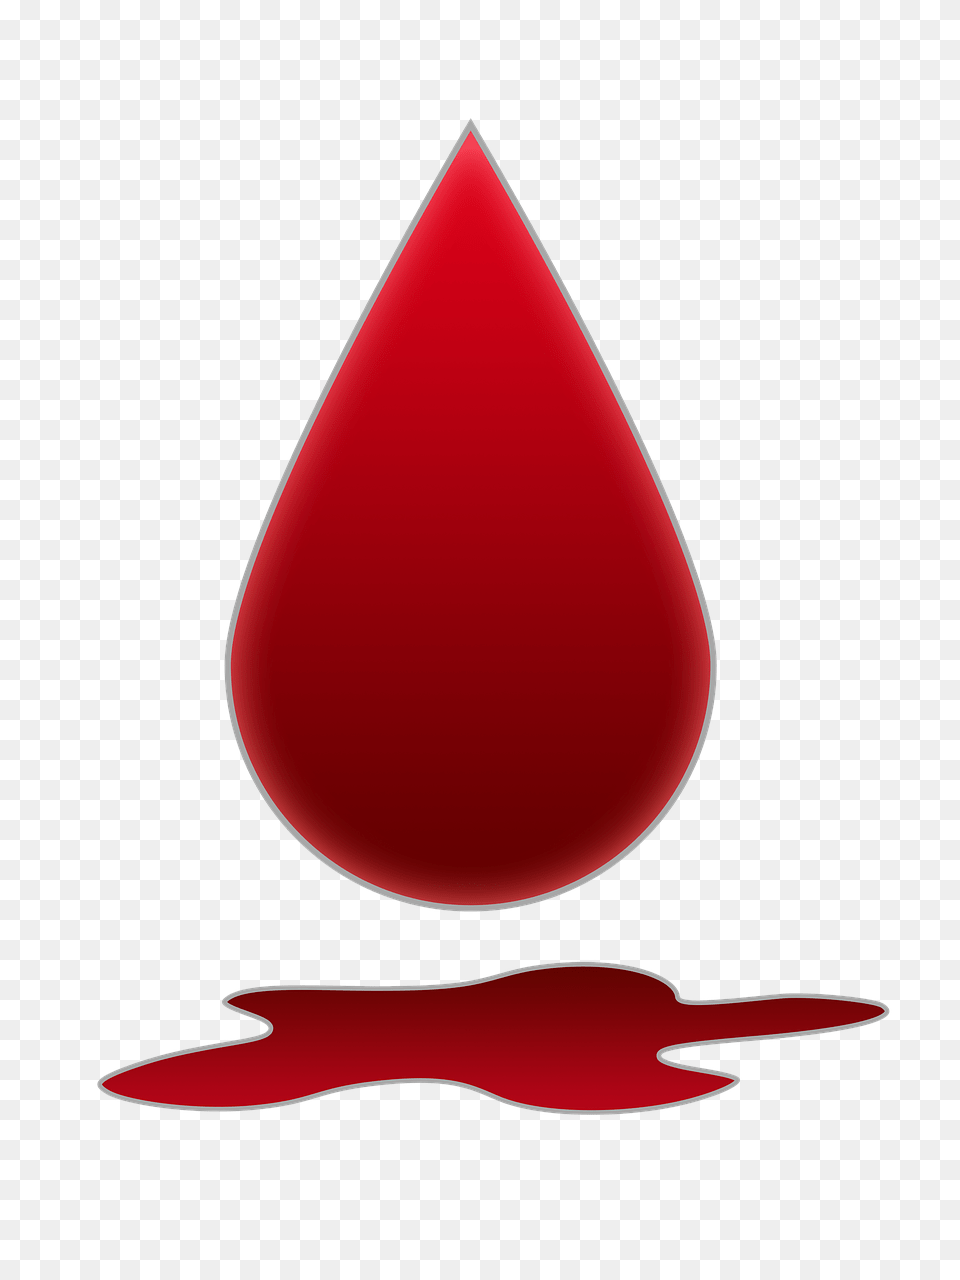 Red Blood Drop, Flower, Petal, Plant, Droplet Free Transparent Png